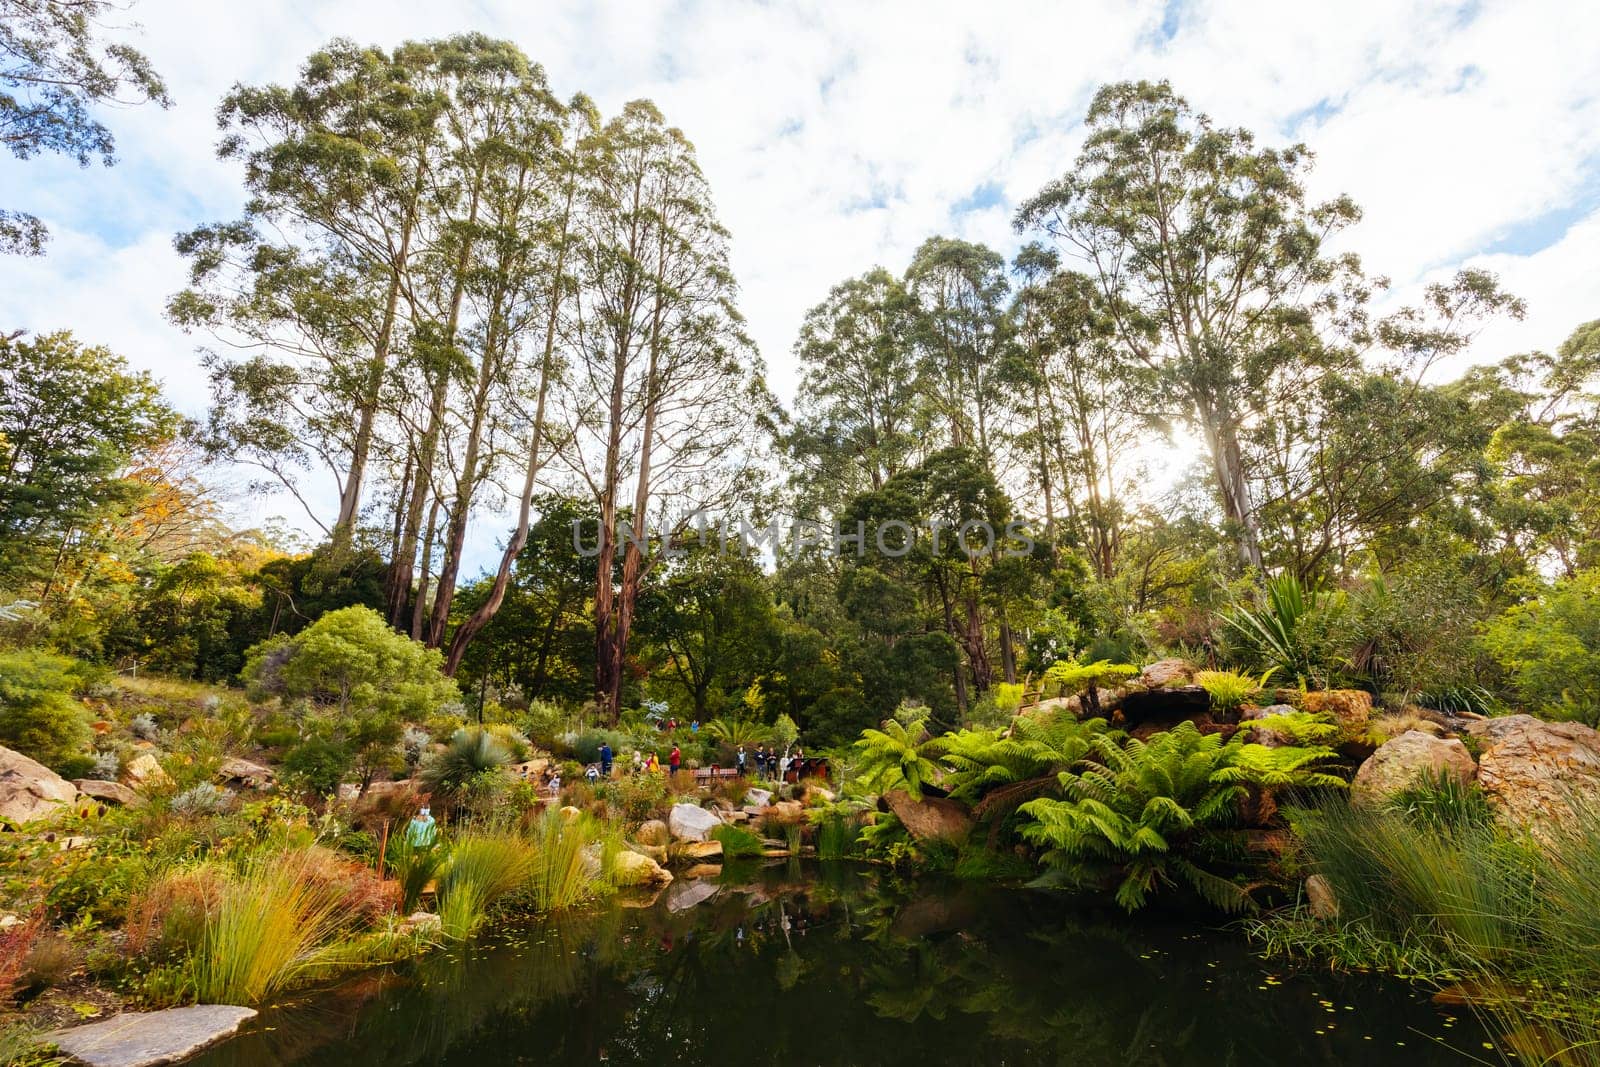 Dandenong Ranges Botanic Garden in Olinda Australia by FiledIMAGE